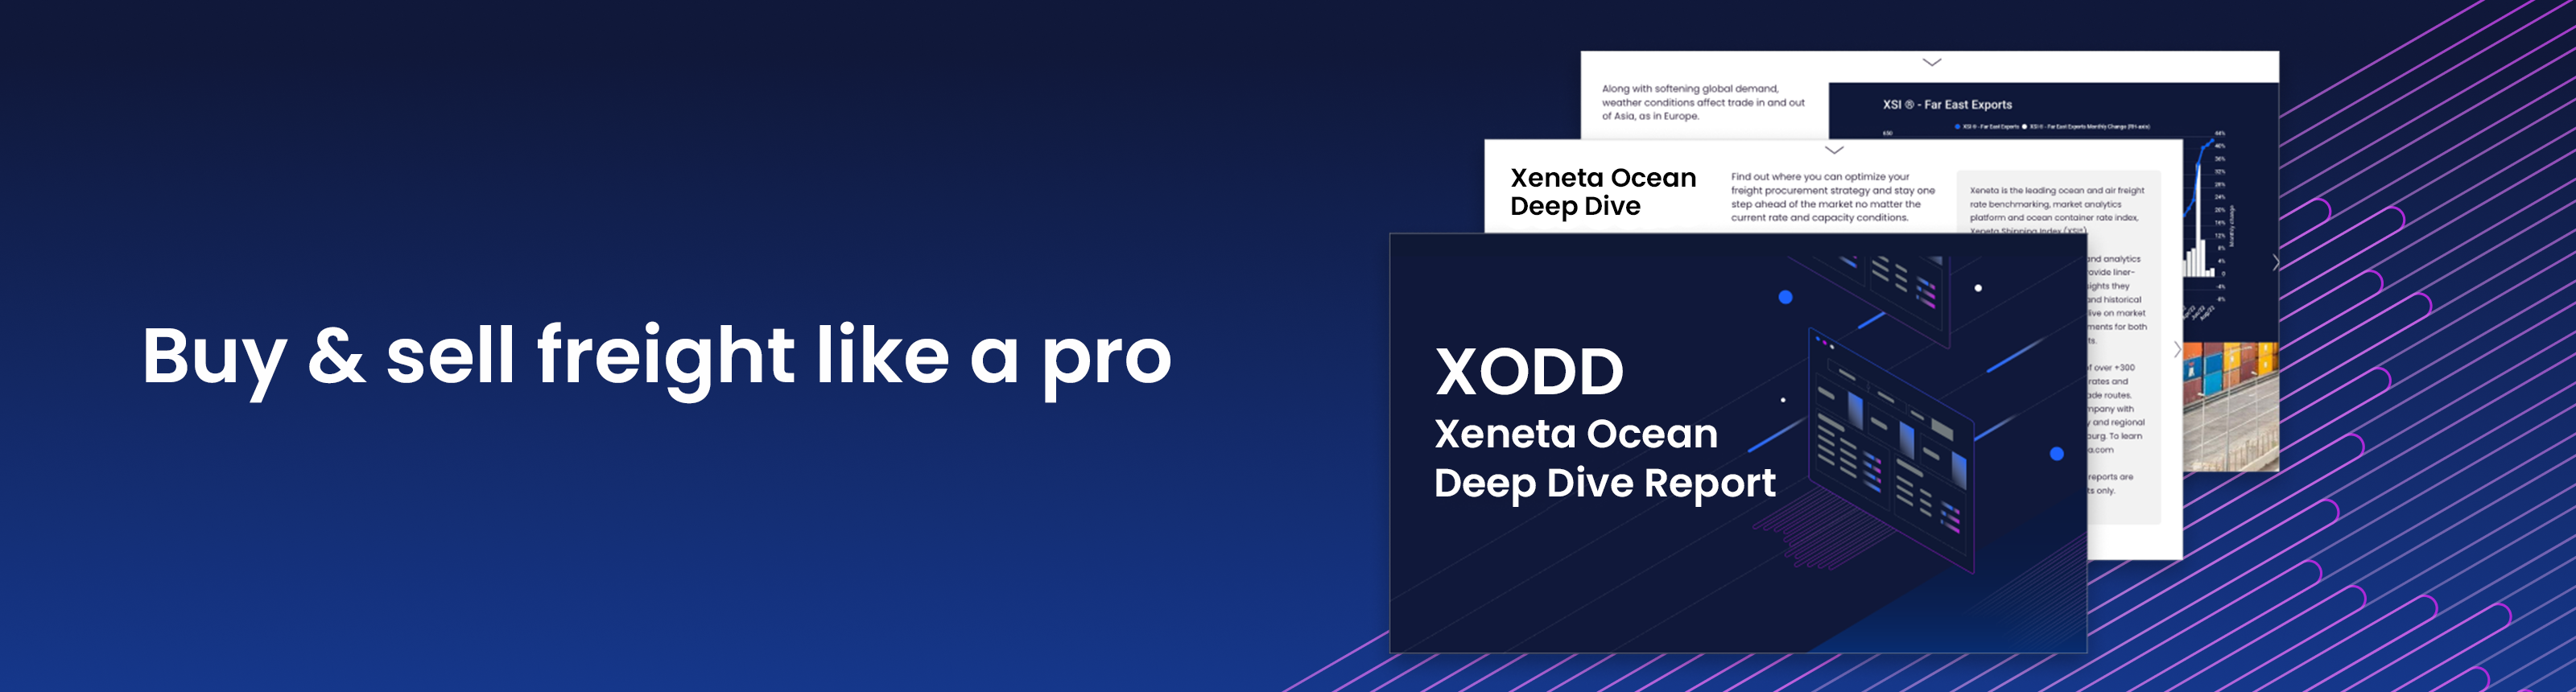 XODD Report Banner 2022_xeneta